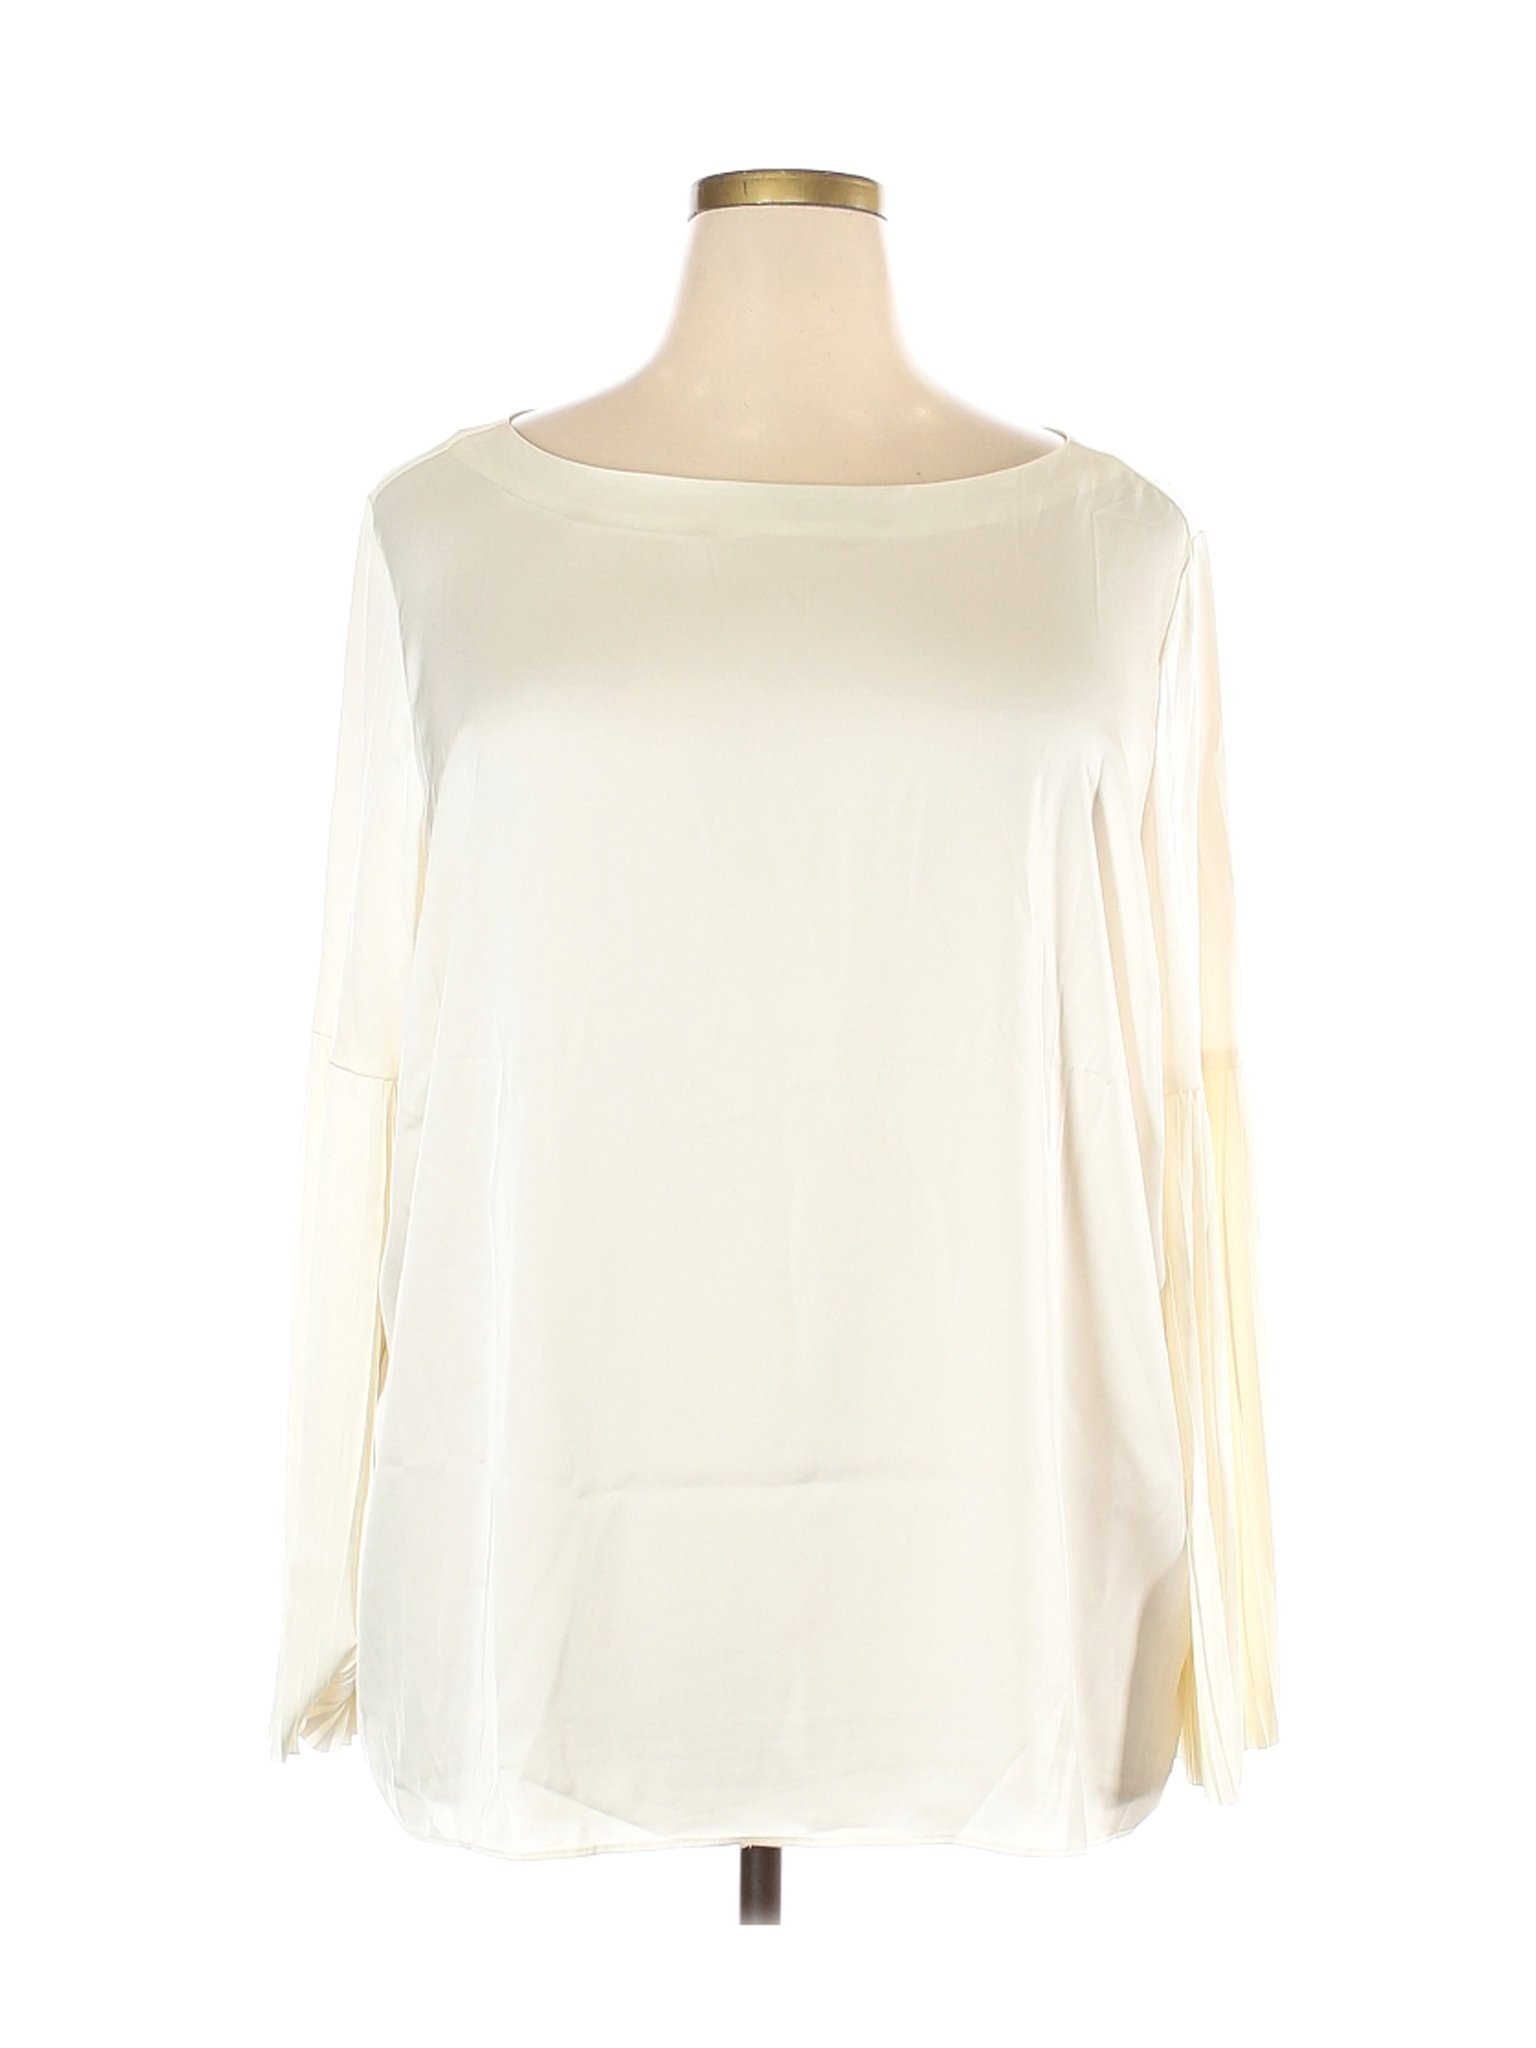 The Limited Women Ivory Long Sleeve Blouse 2X Plus | eBay